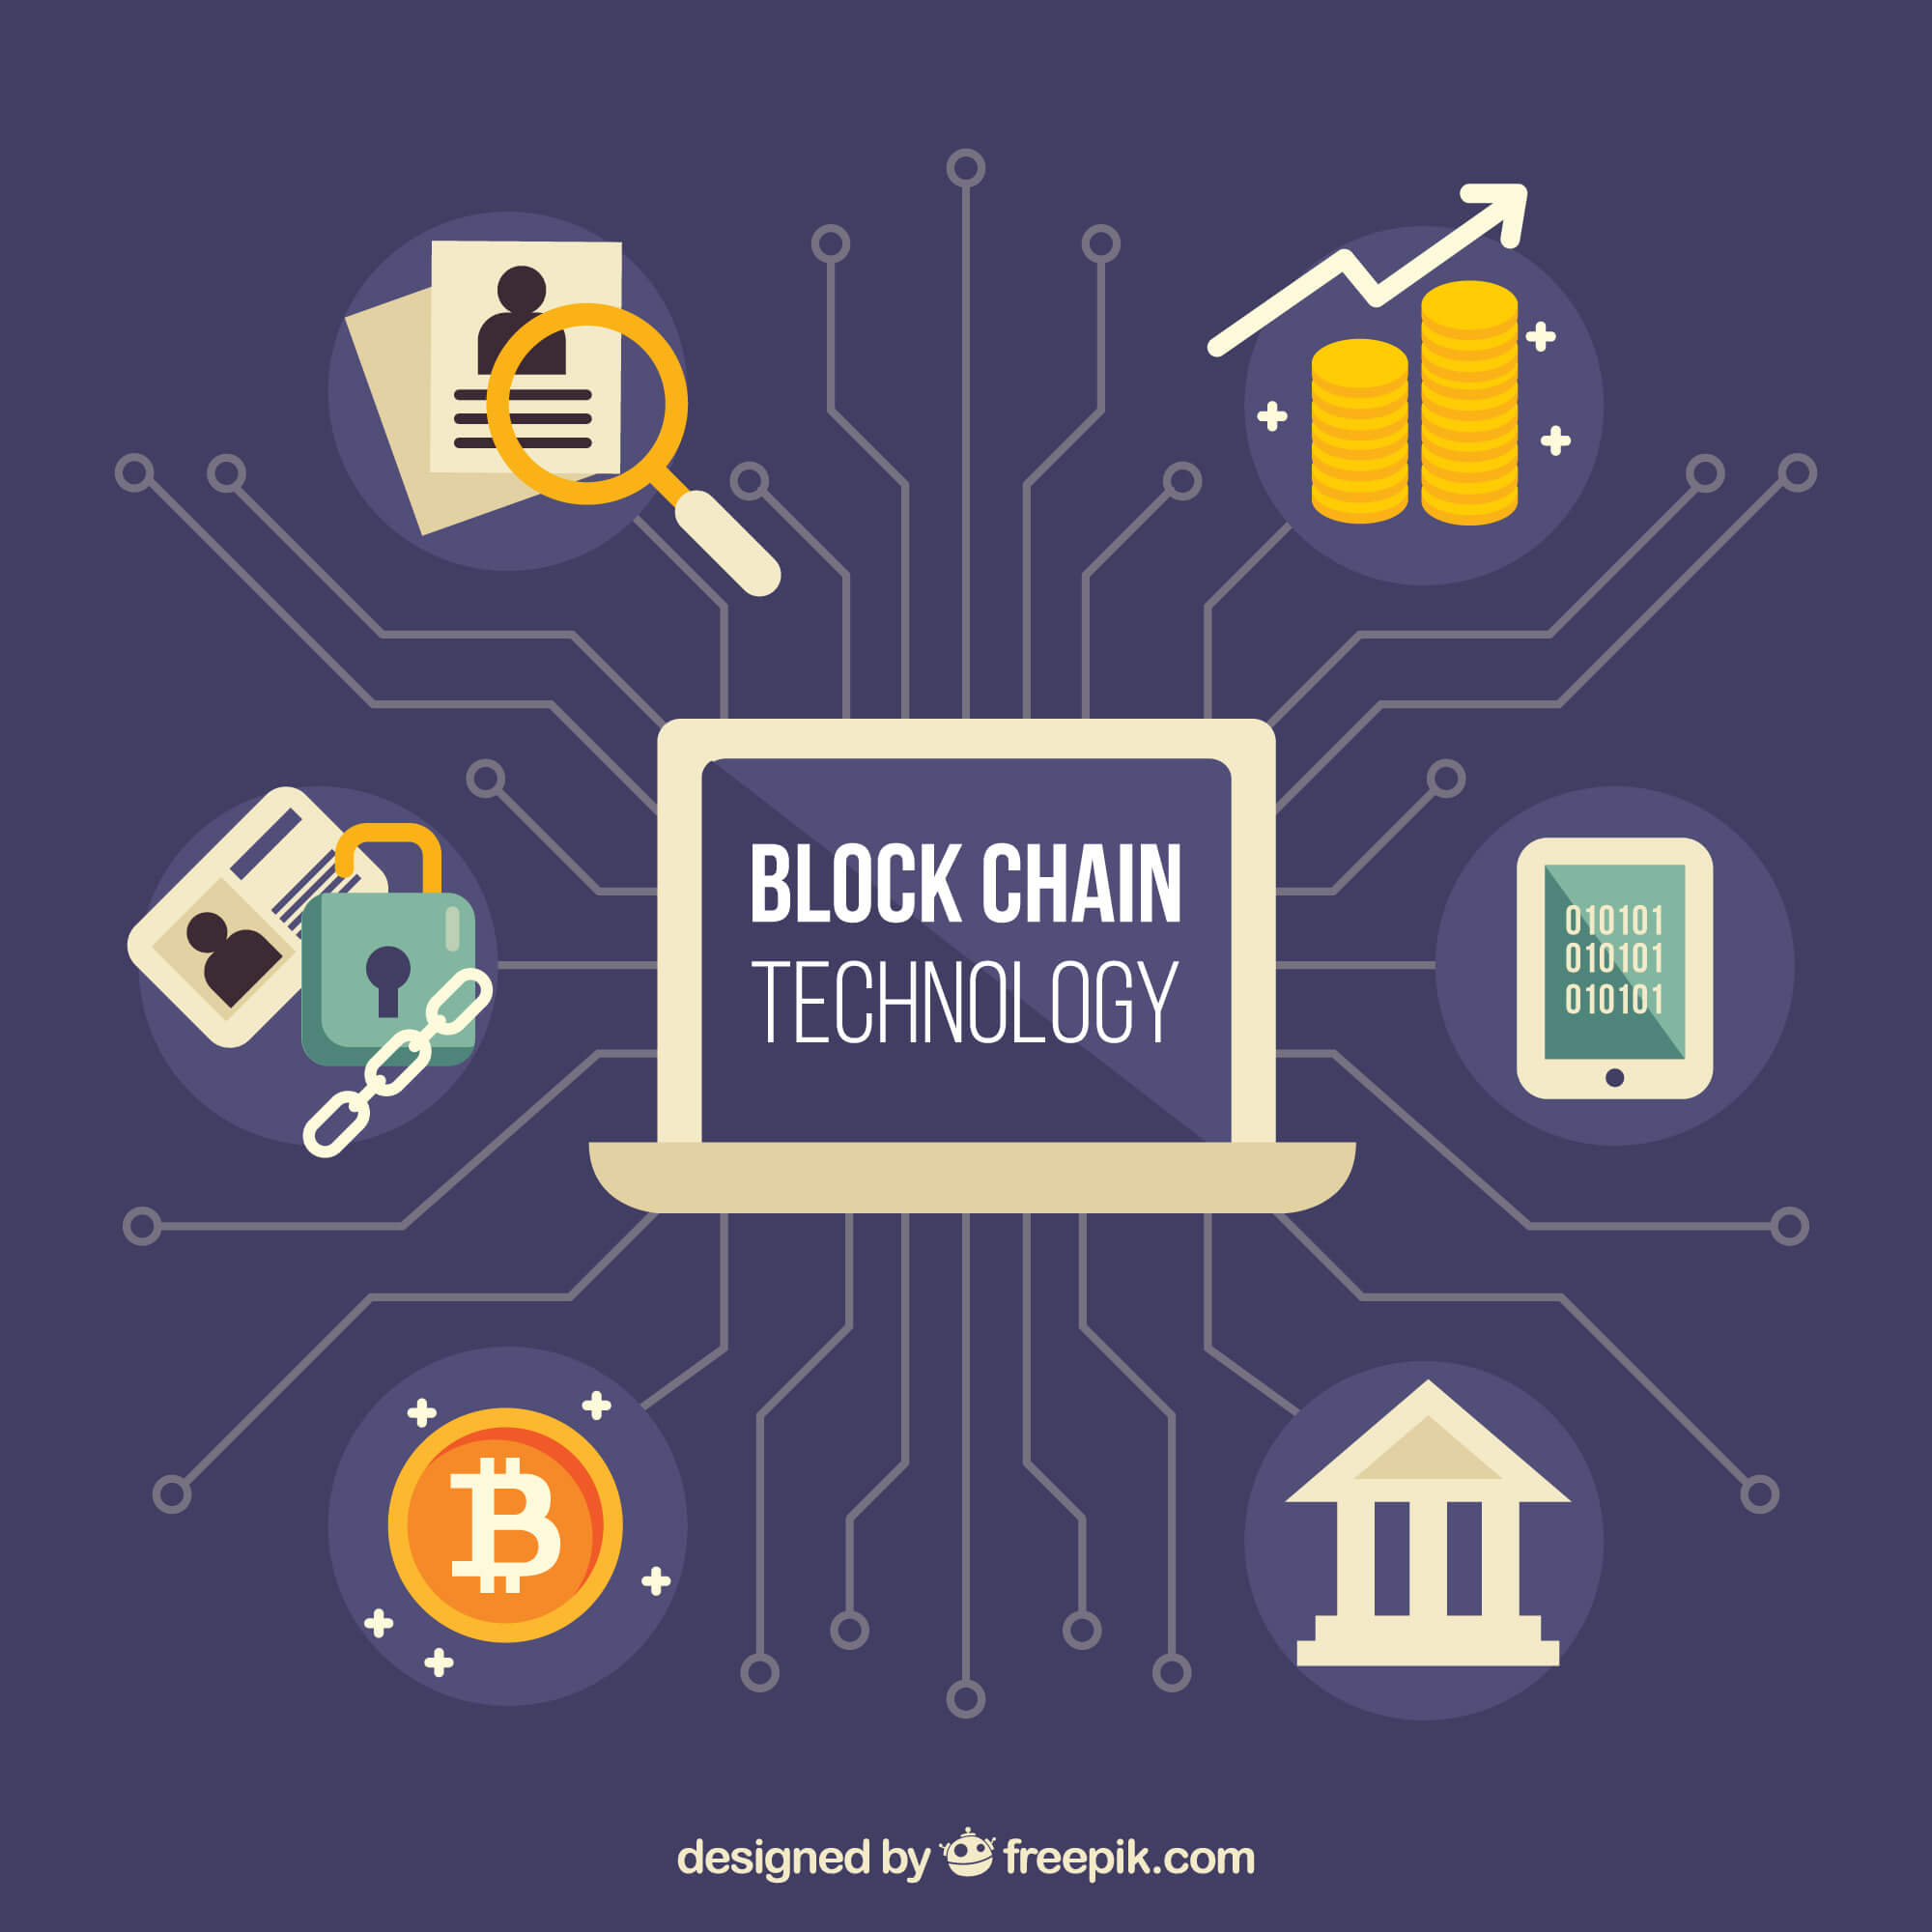 What is Blockchain?